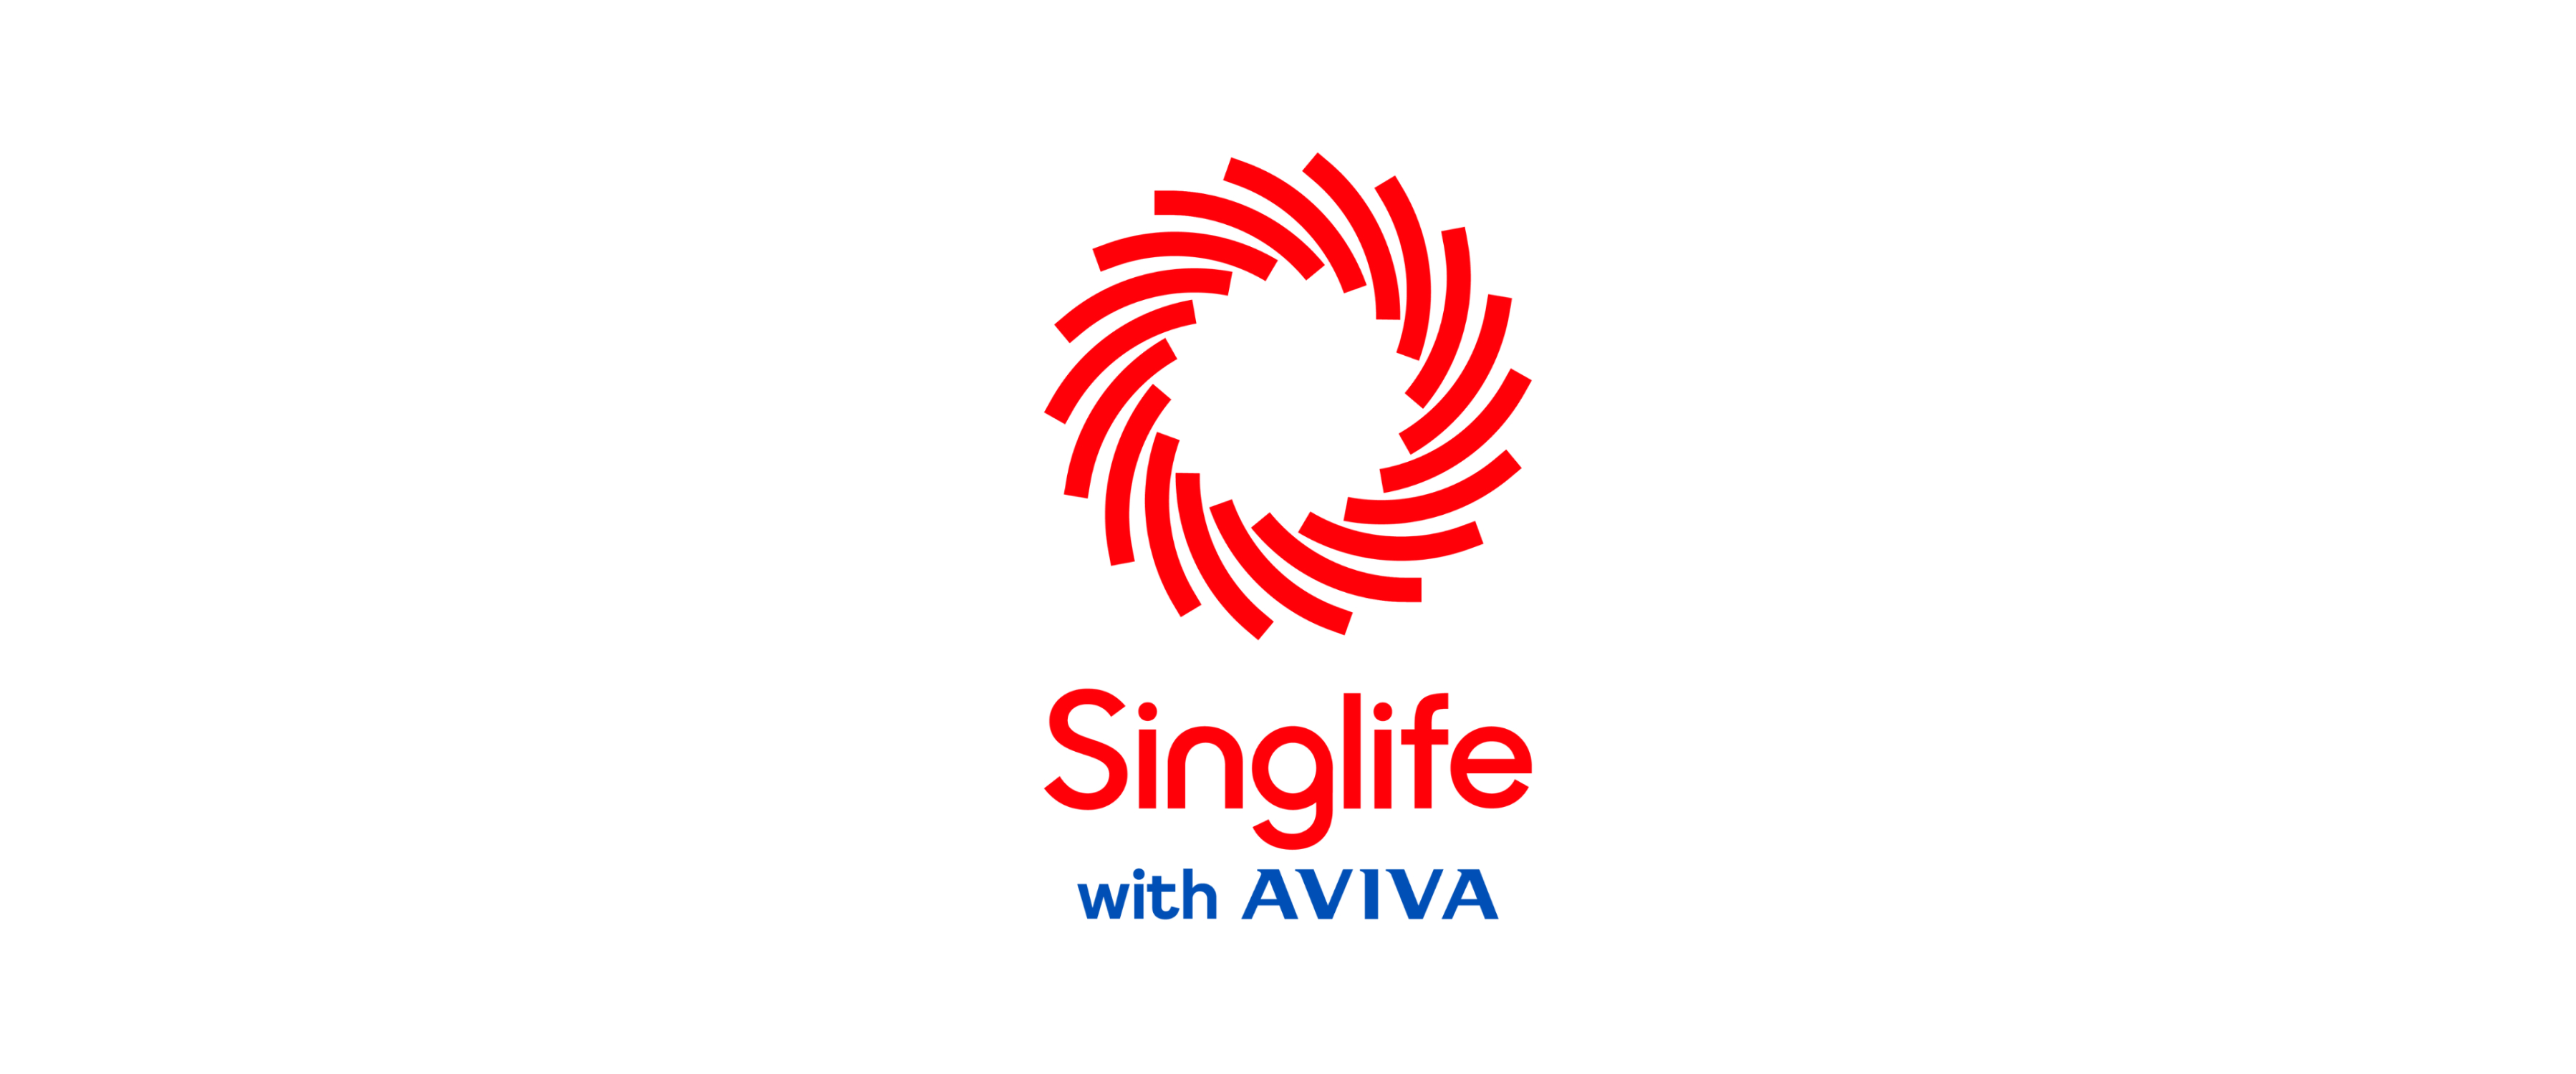 Image of Singlife with Aviva logo